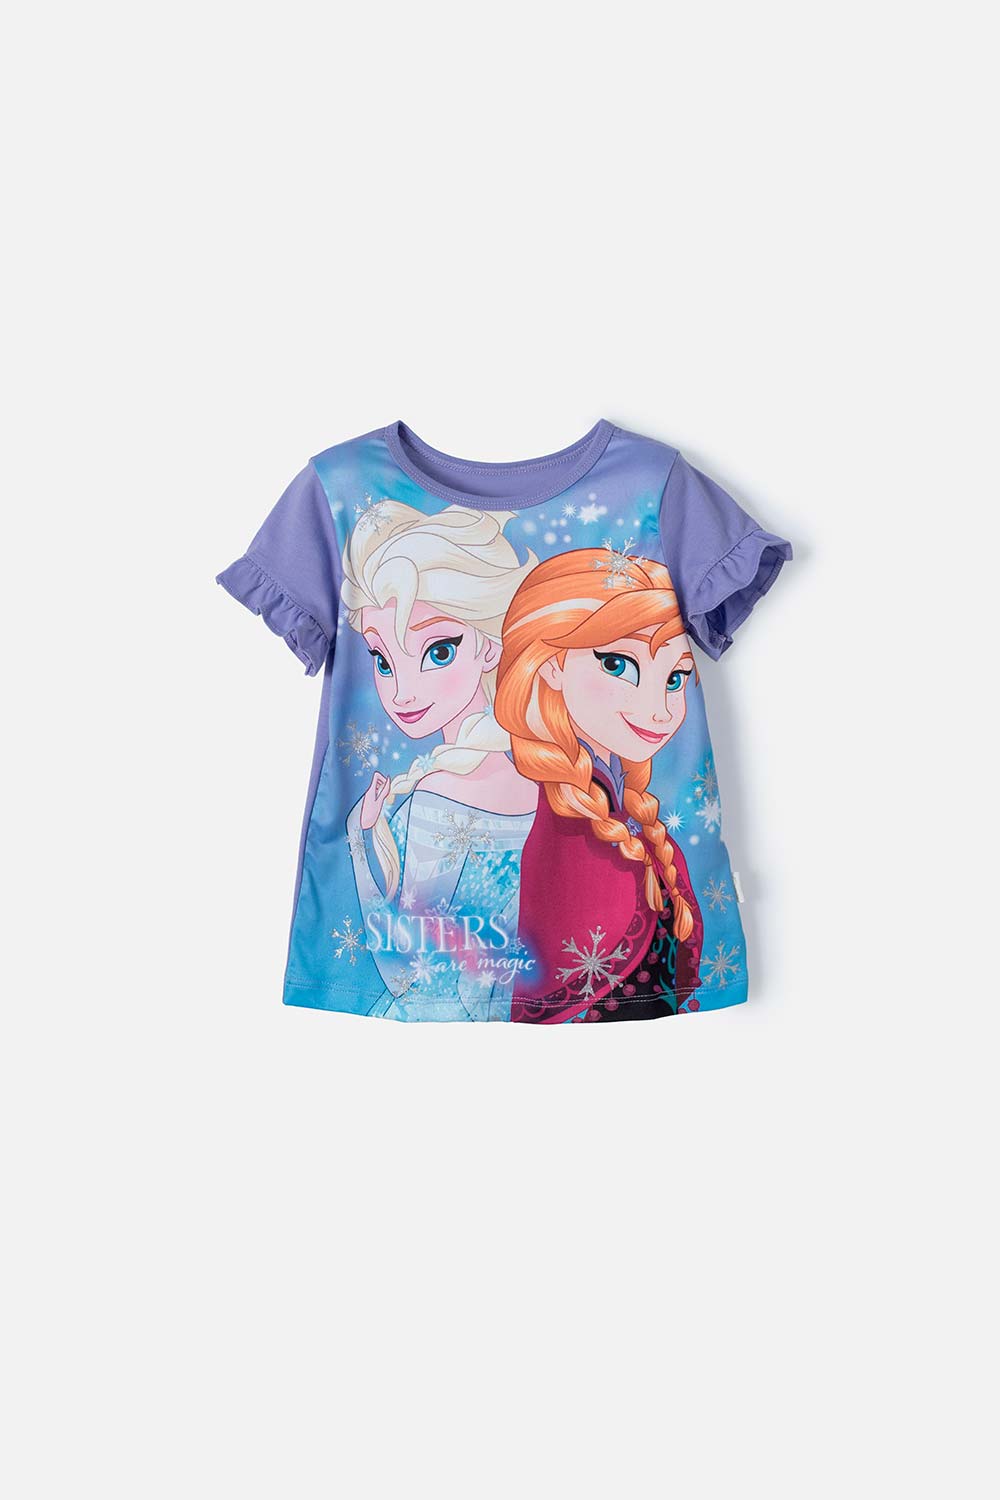 Camiseta de Frozen manga corta lila para niña 2t a 5t 2T-0